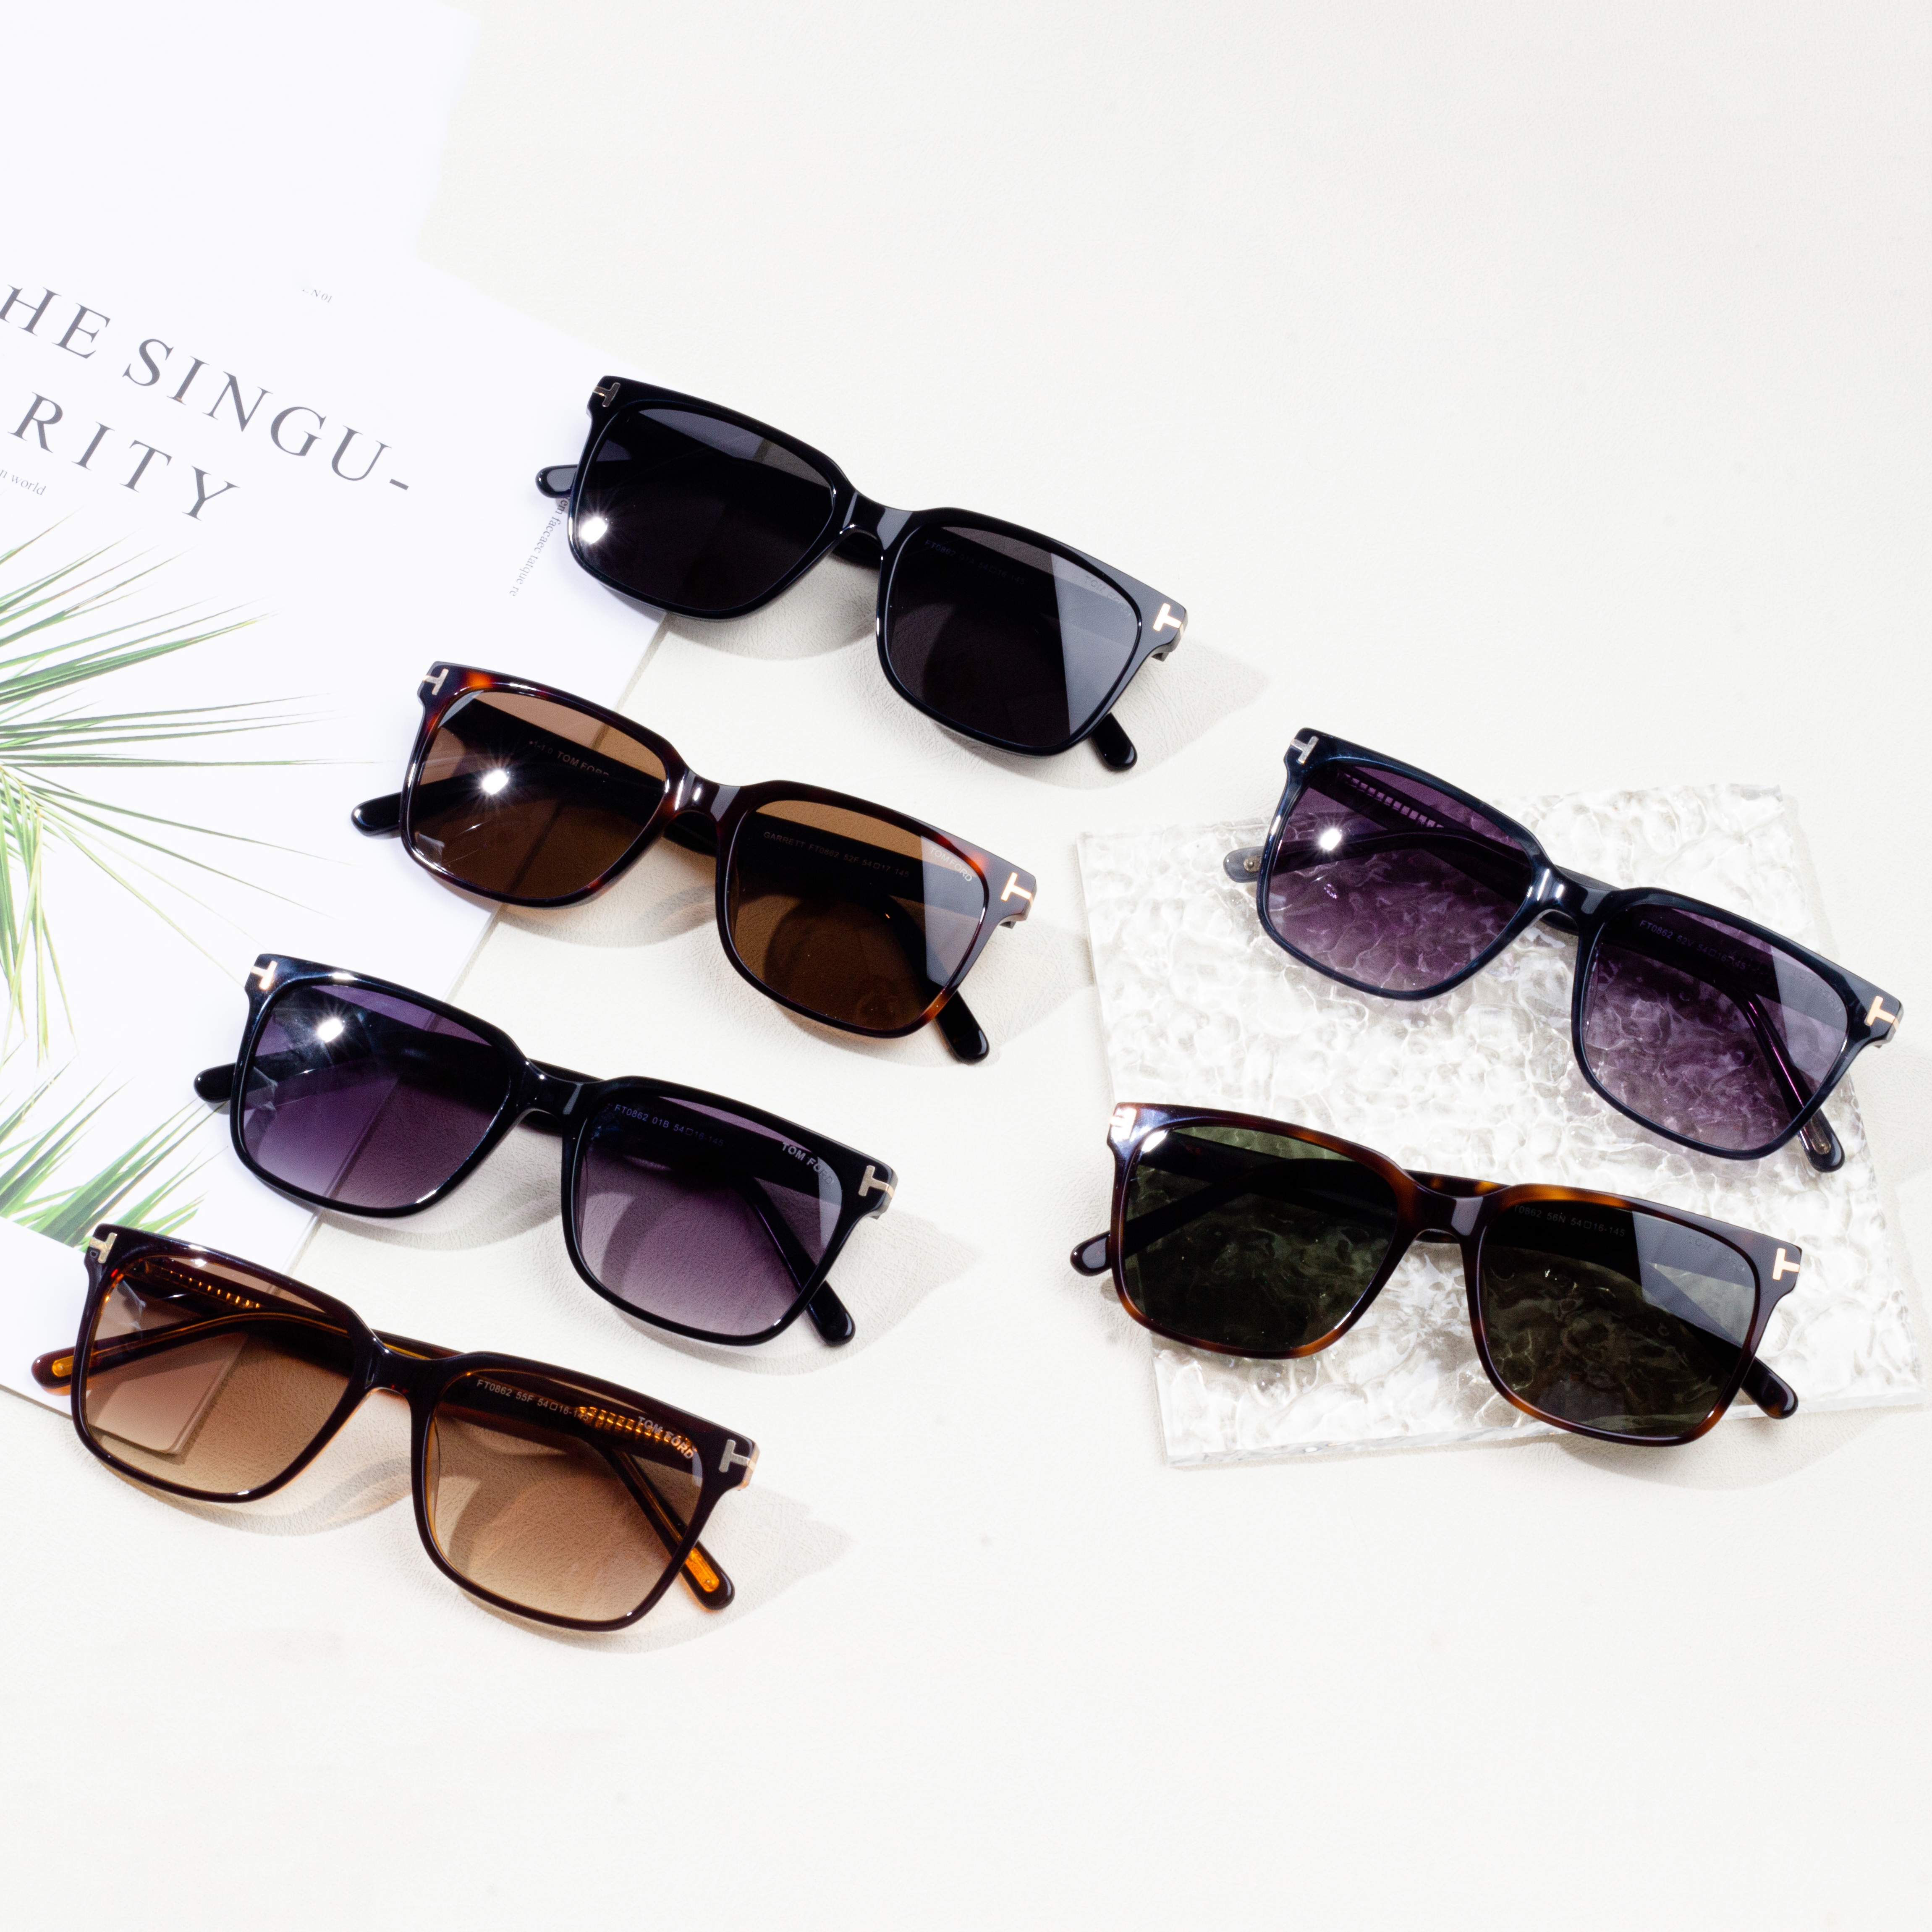 Froulju Sunglasses Fashion Sunglasses New Arrival Wholesale